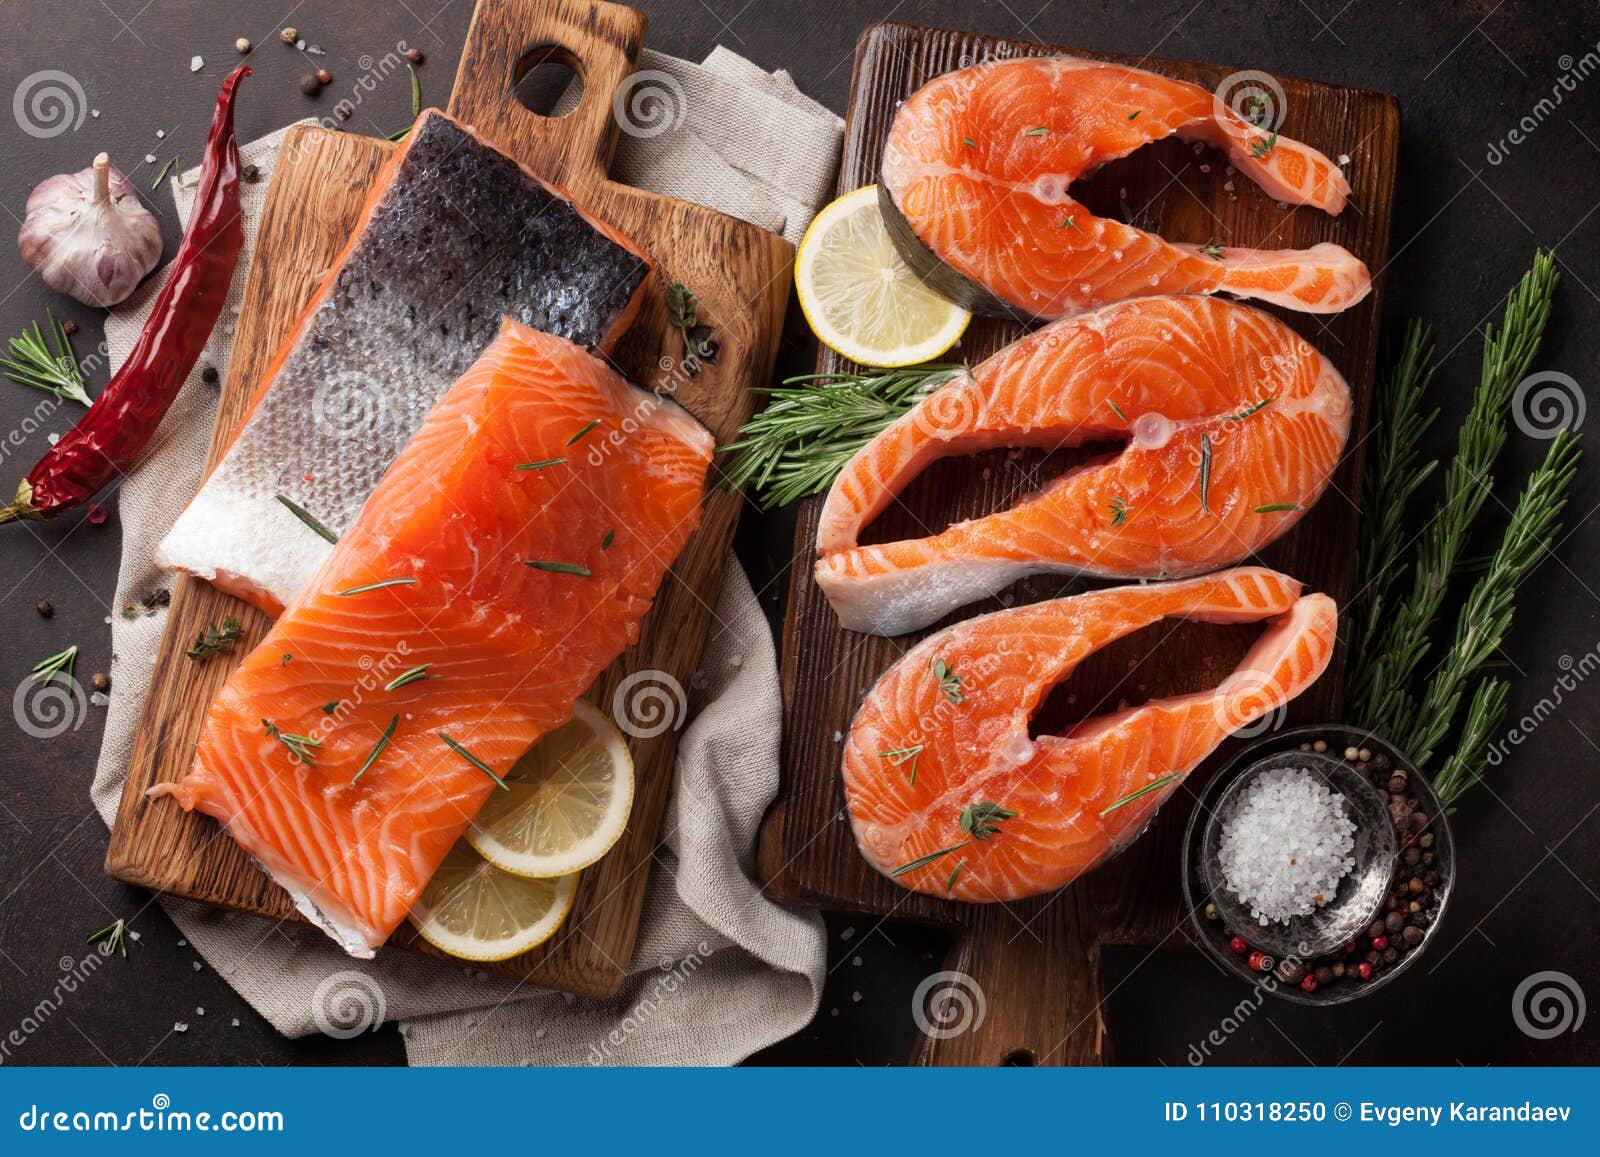 Raw salmon fish fillet stock photo. Image of lemon, cooking